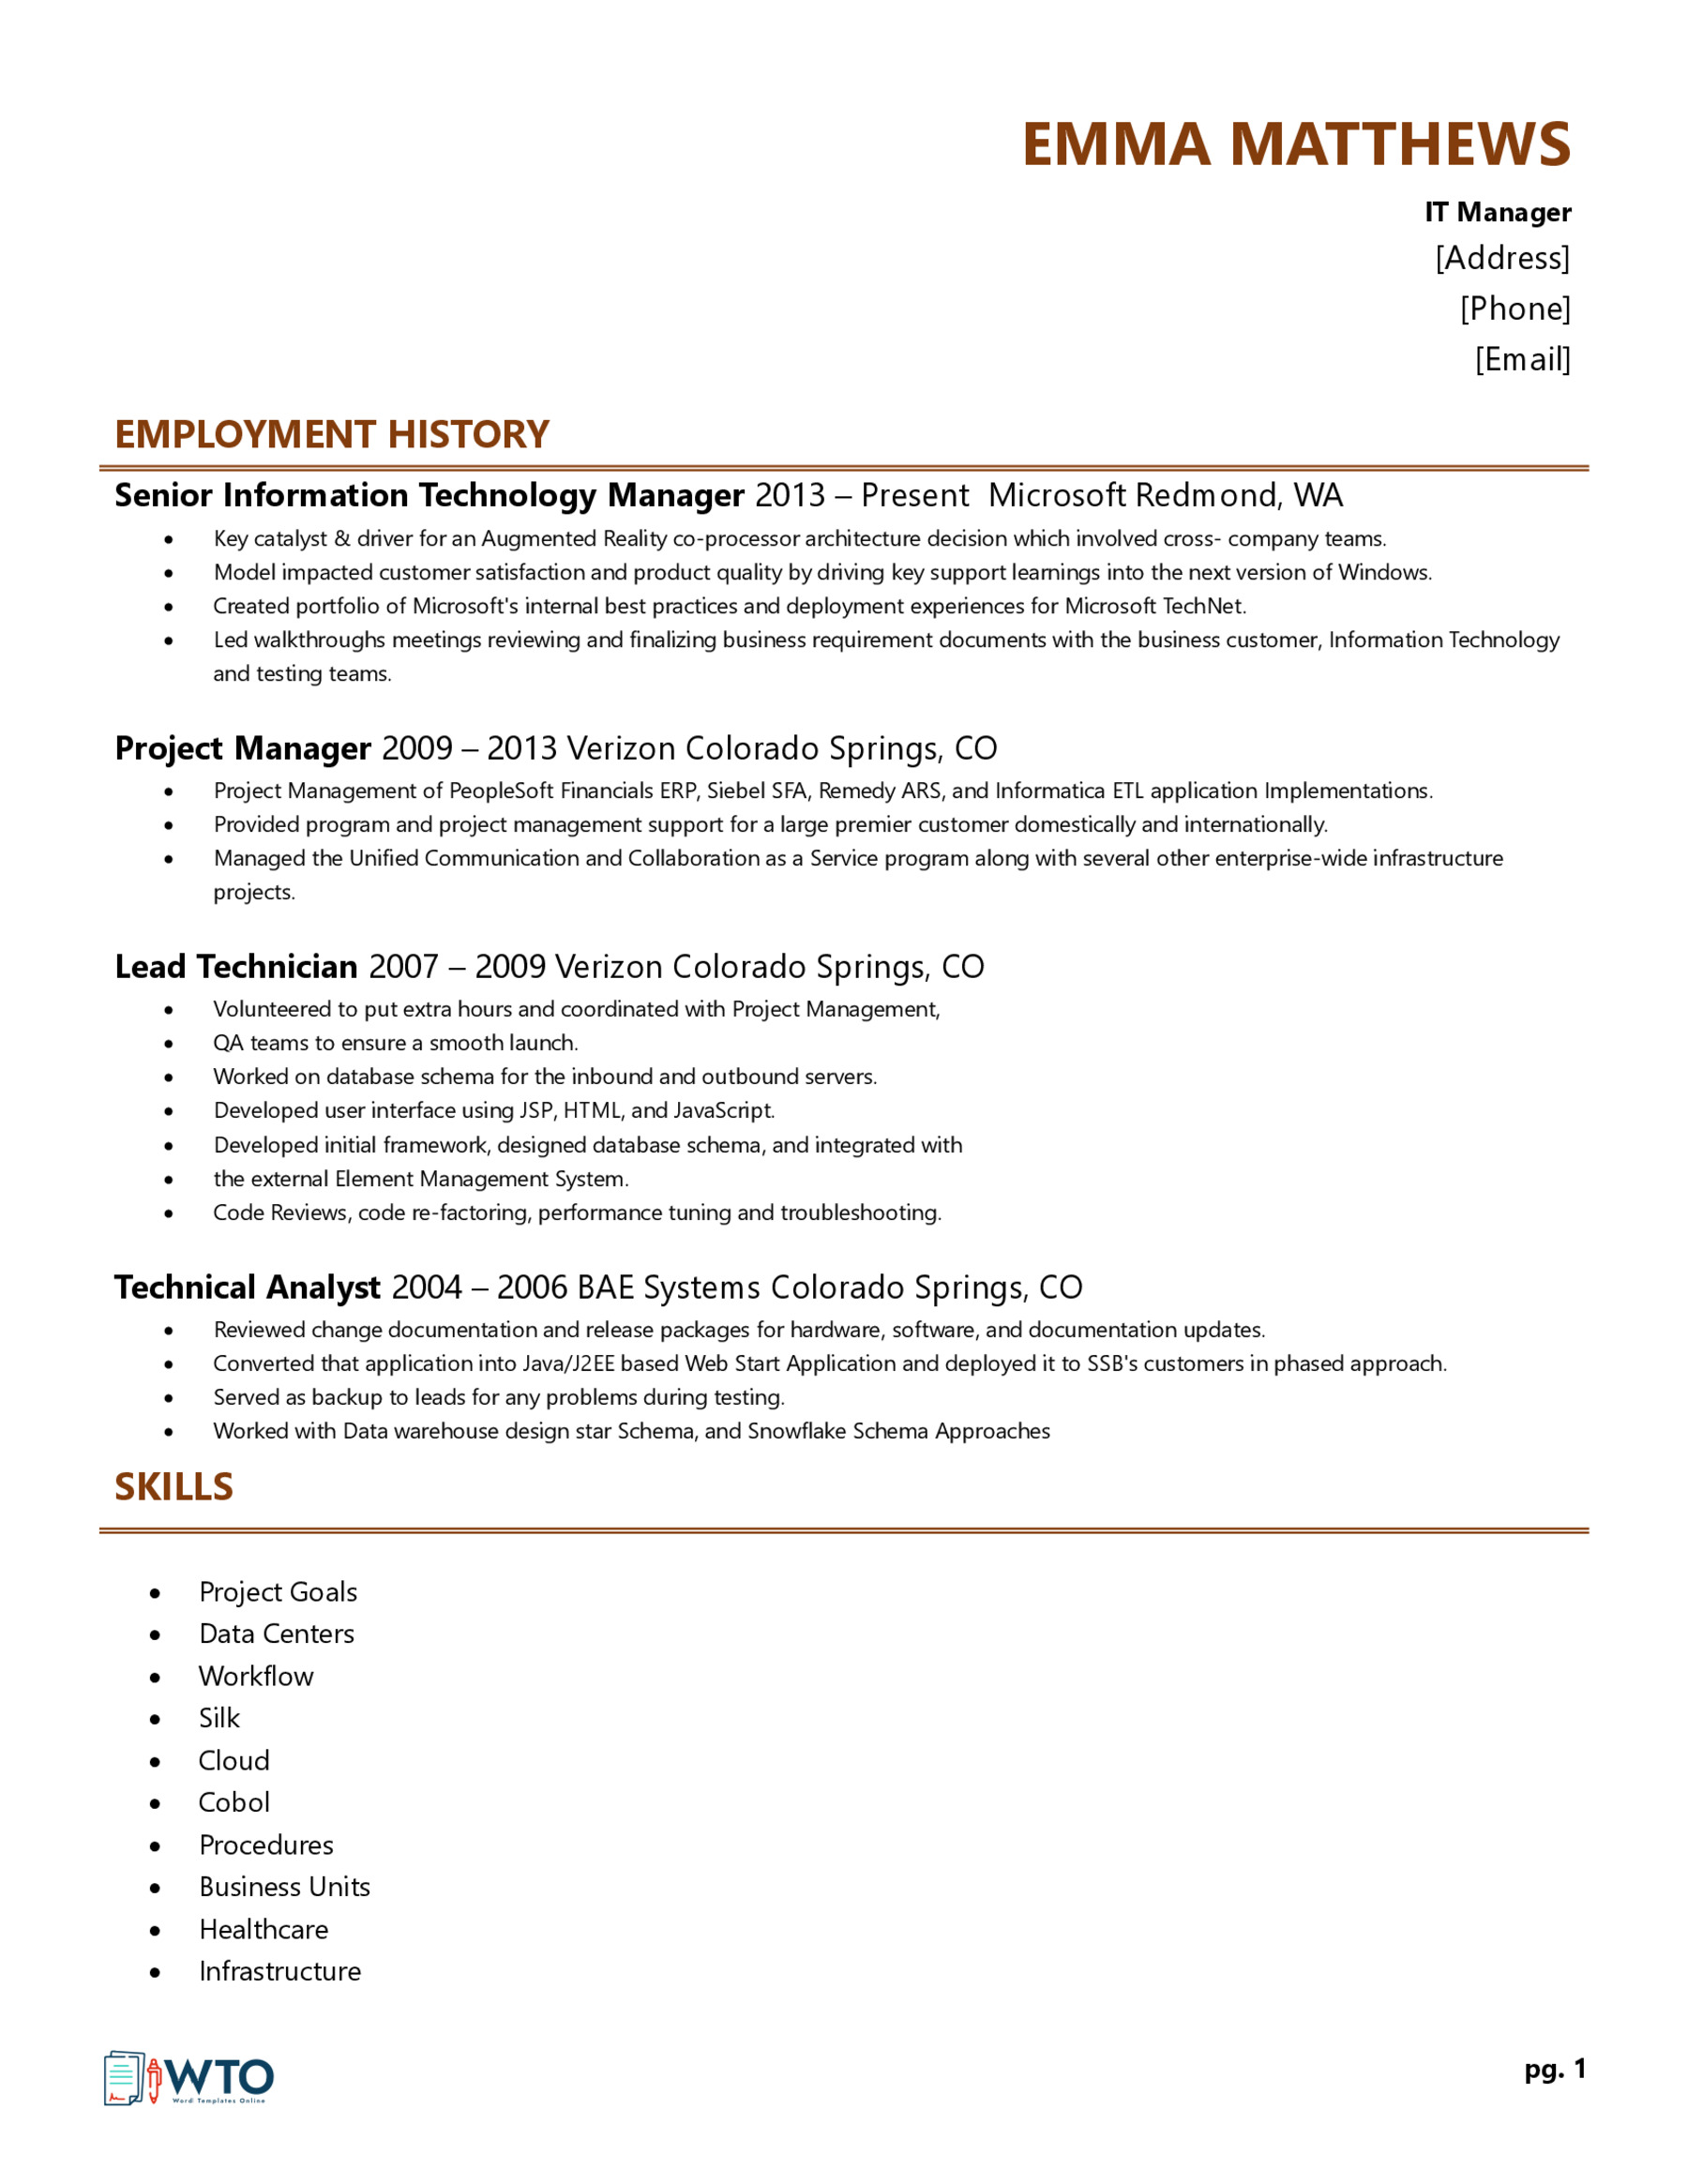 Effective IT Manager Skills - Sample Resume